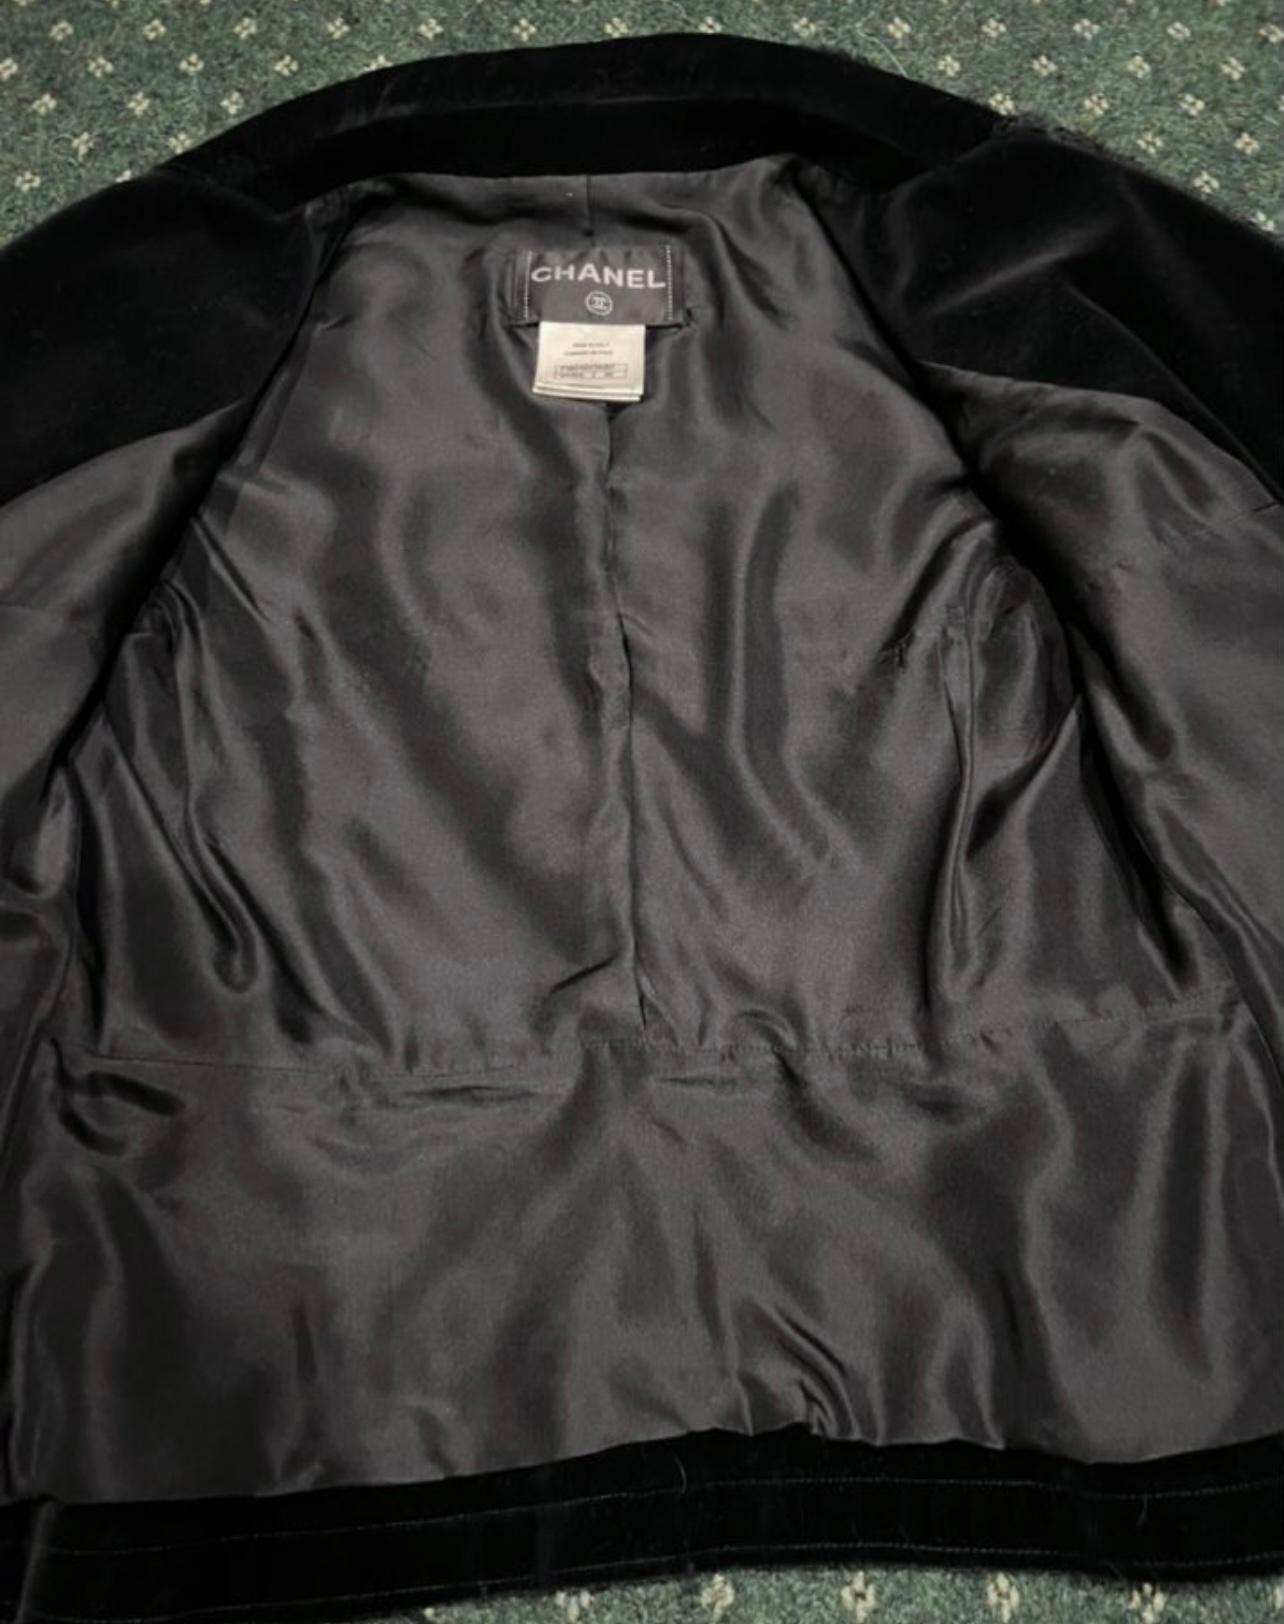 Chanel Claudia Schiffer CC Patch Black Jacket 5